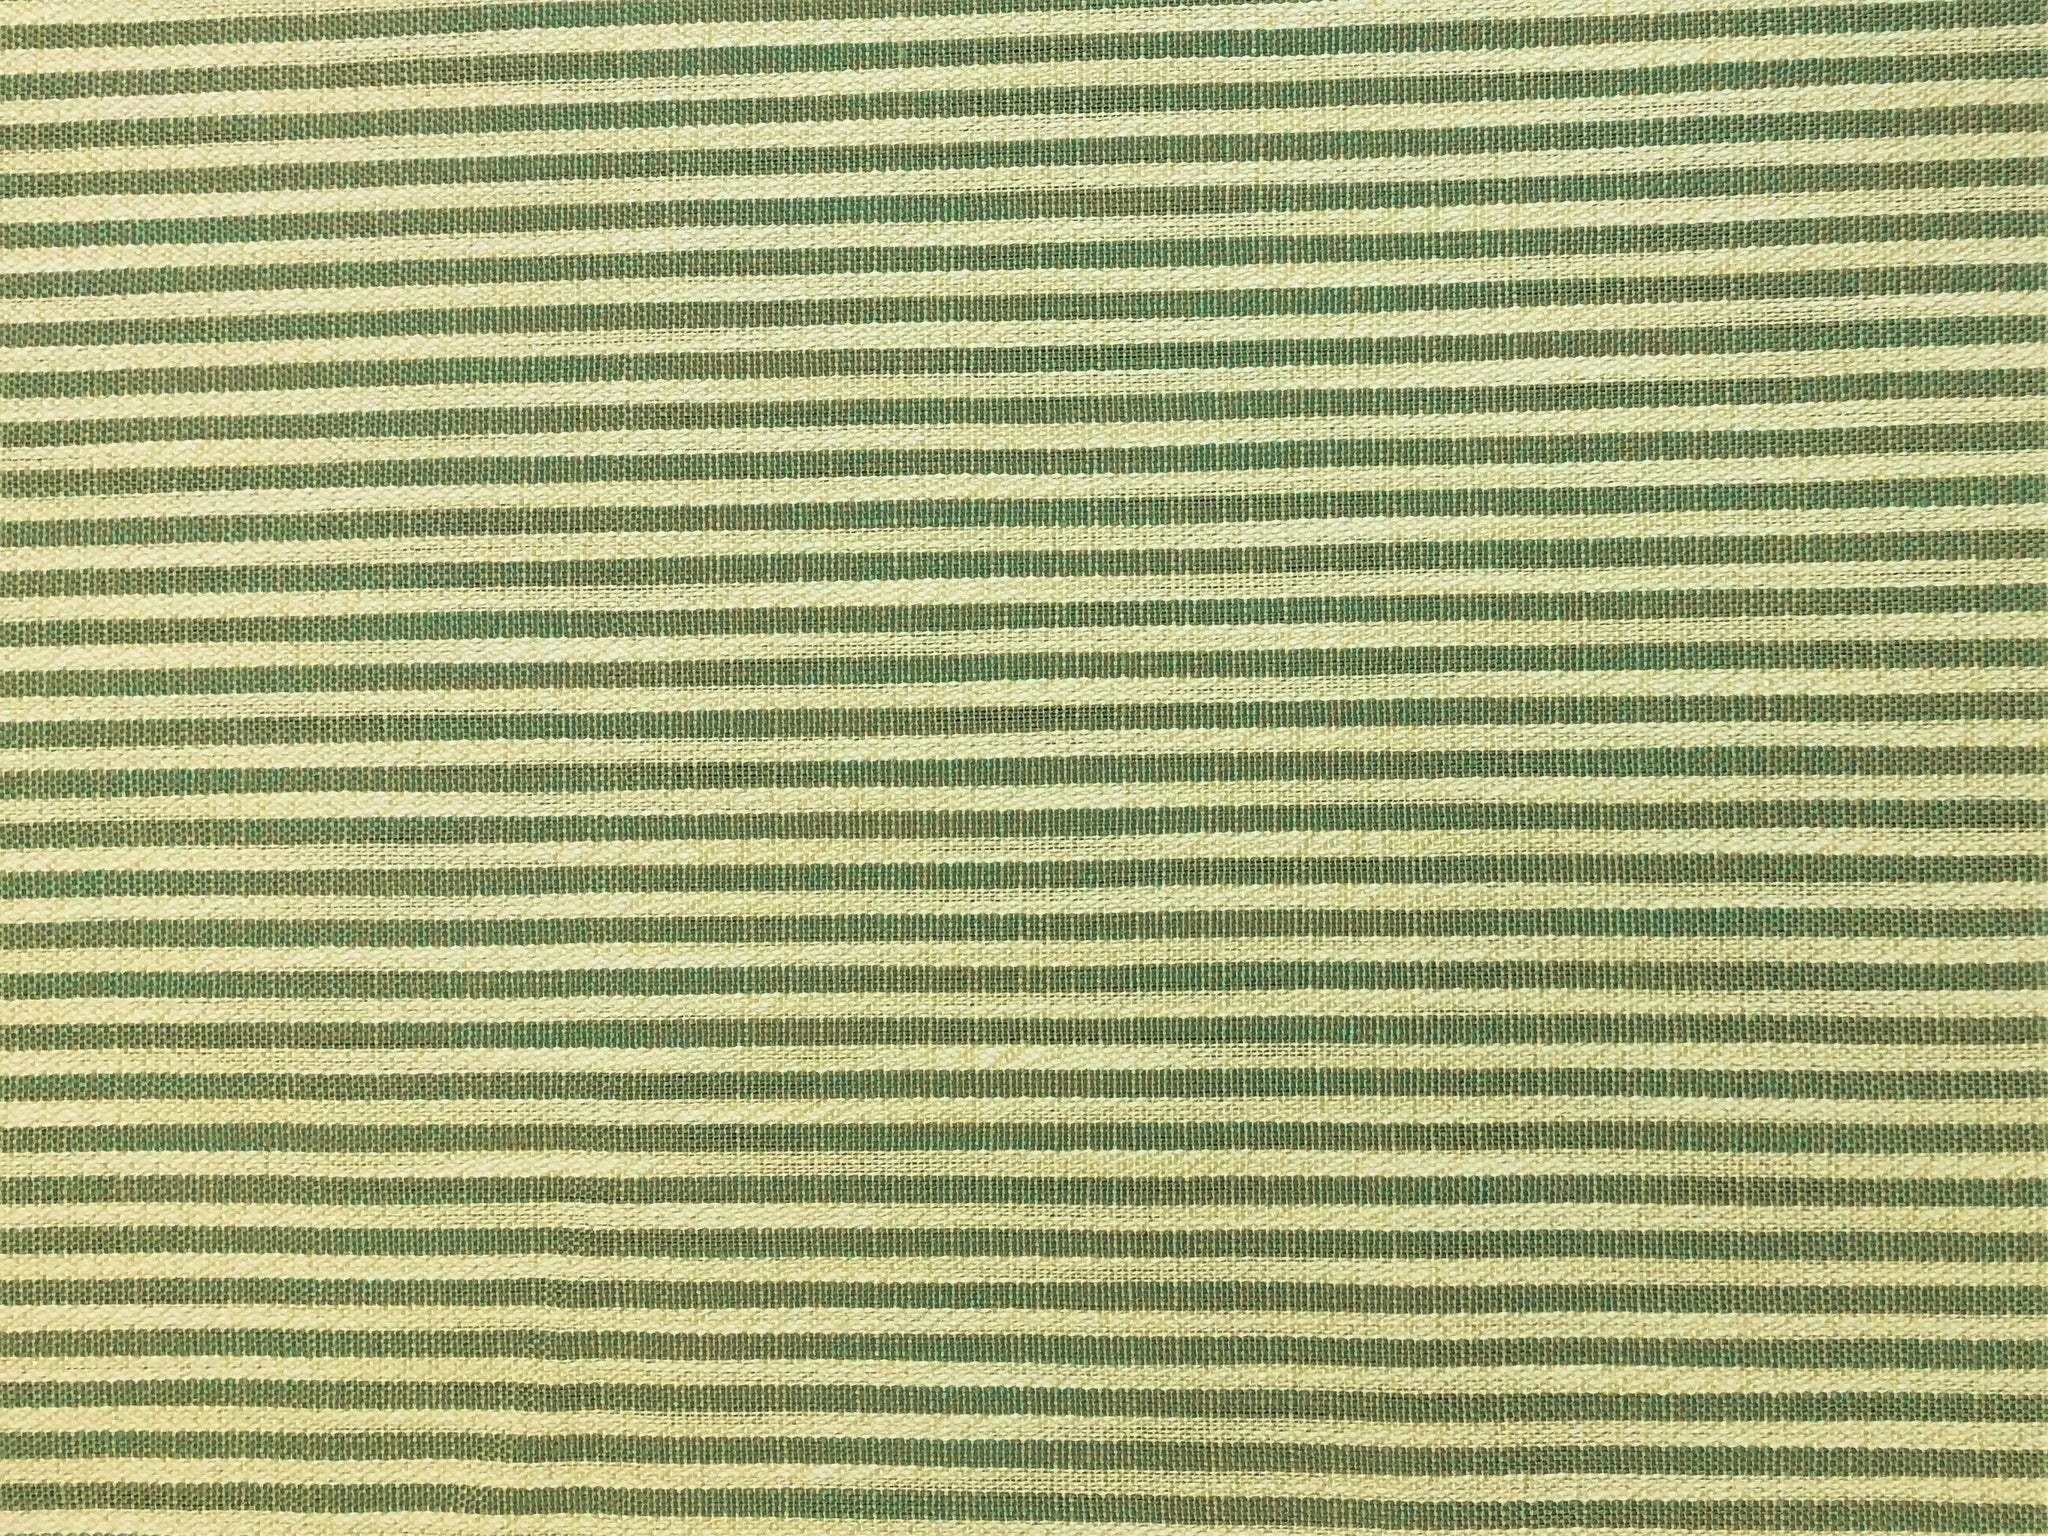 Beige and Green Stripe Ticking Fabrics